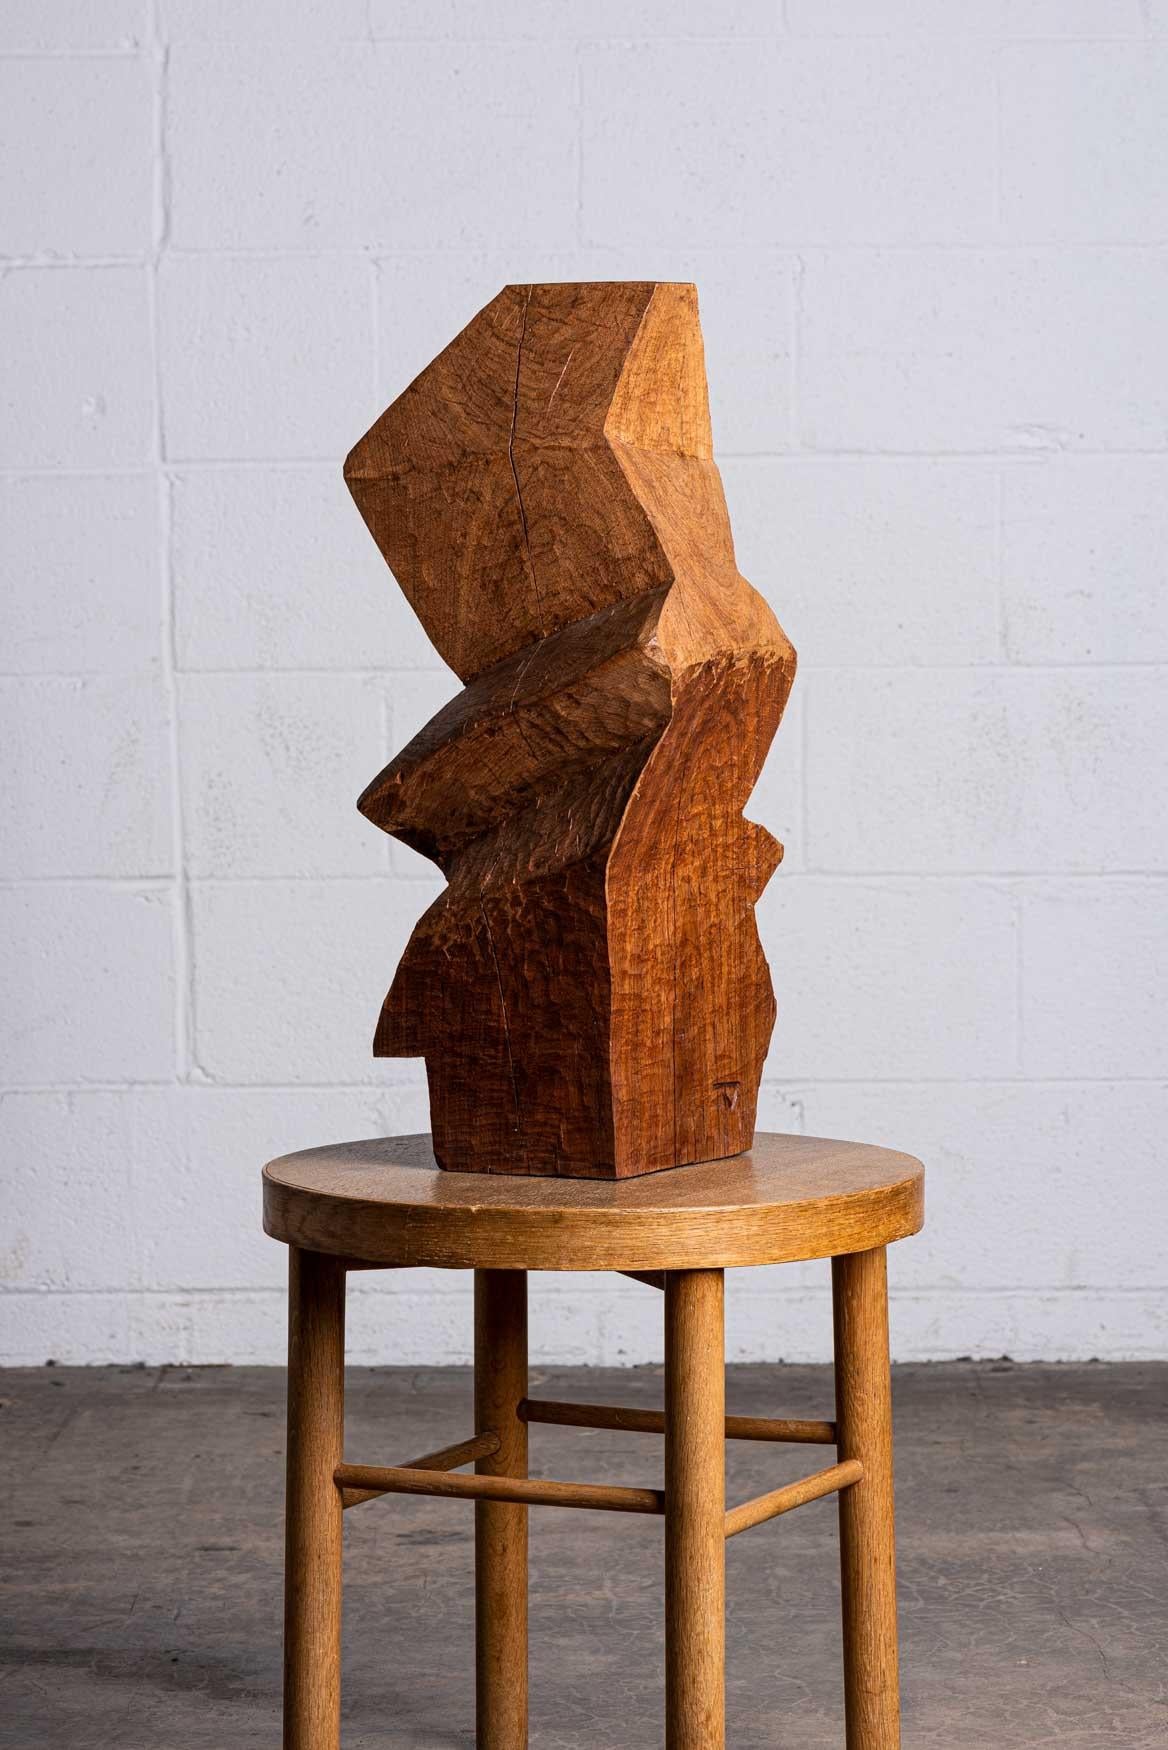 Abstract Wooden Sculpture 9